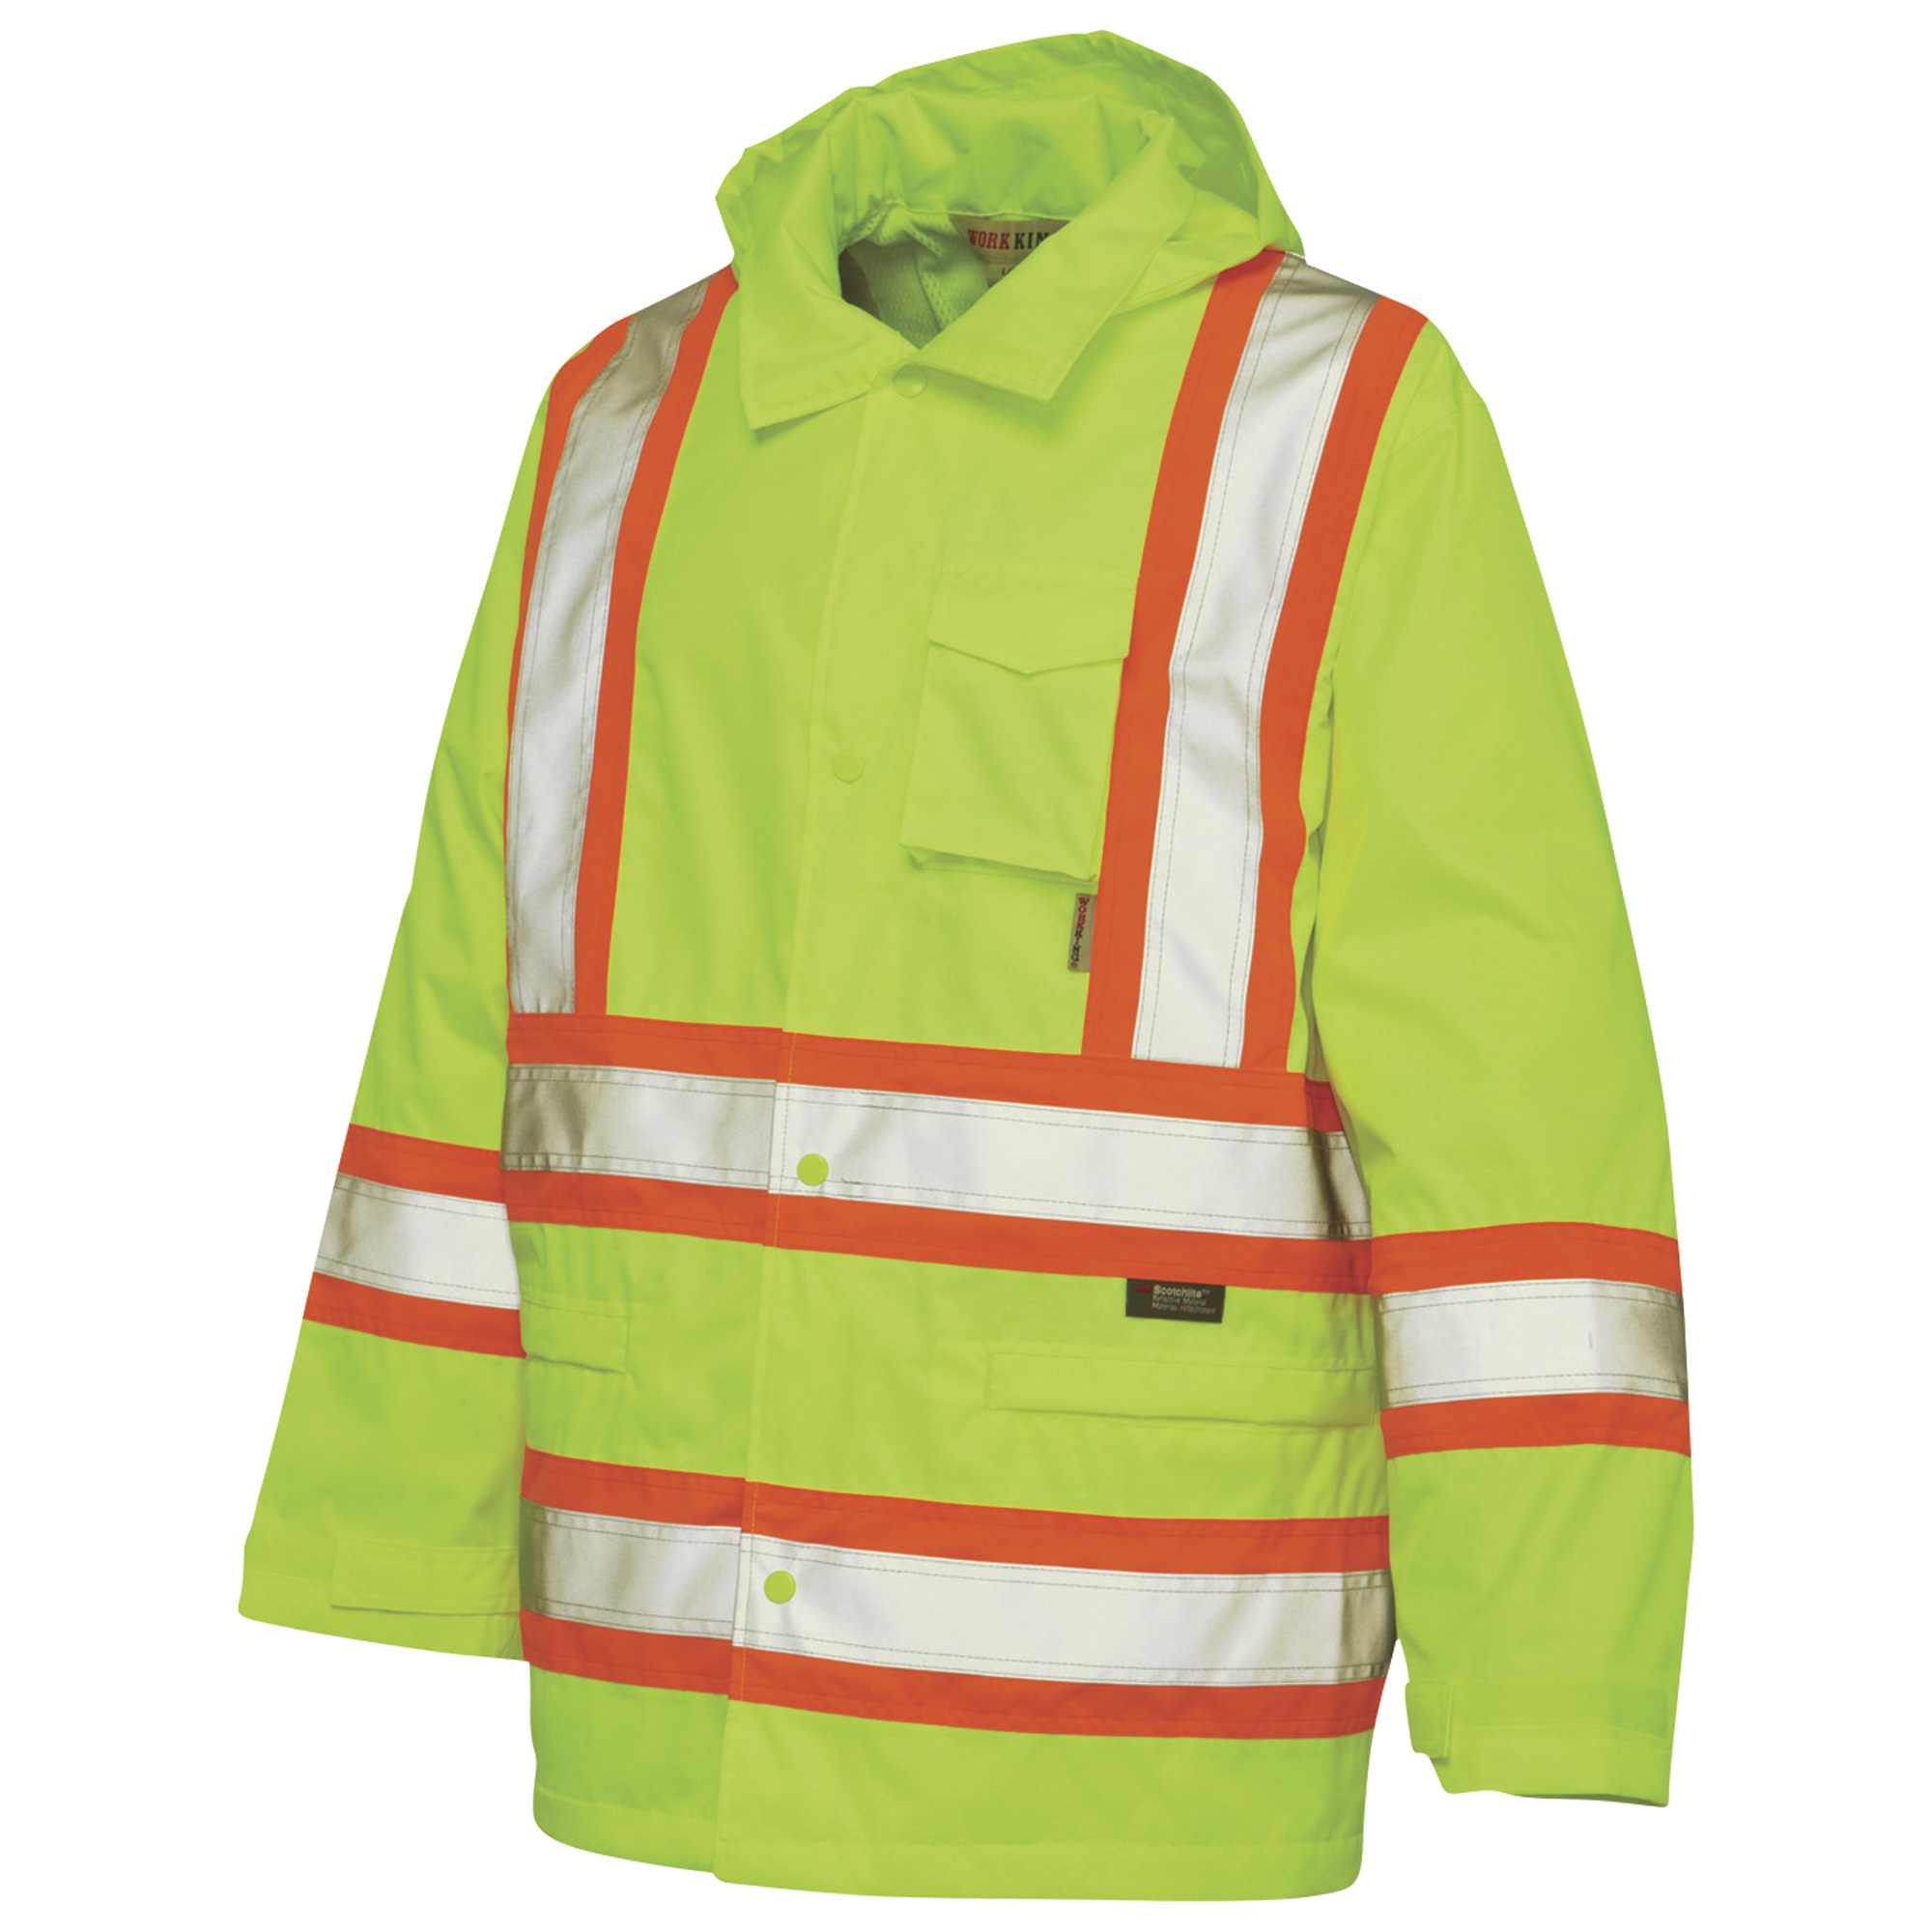 Work King Men's Class 2 High Visibility Rain Jacket â Lime, 3XL, Model S37221-FLGR-3XL